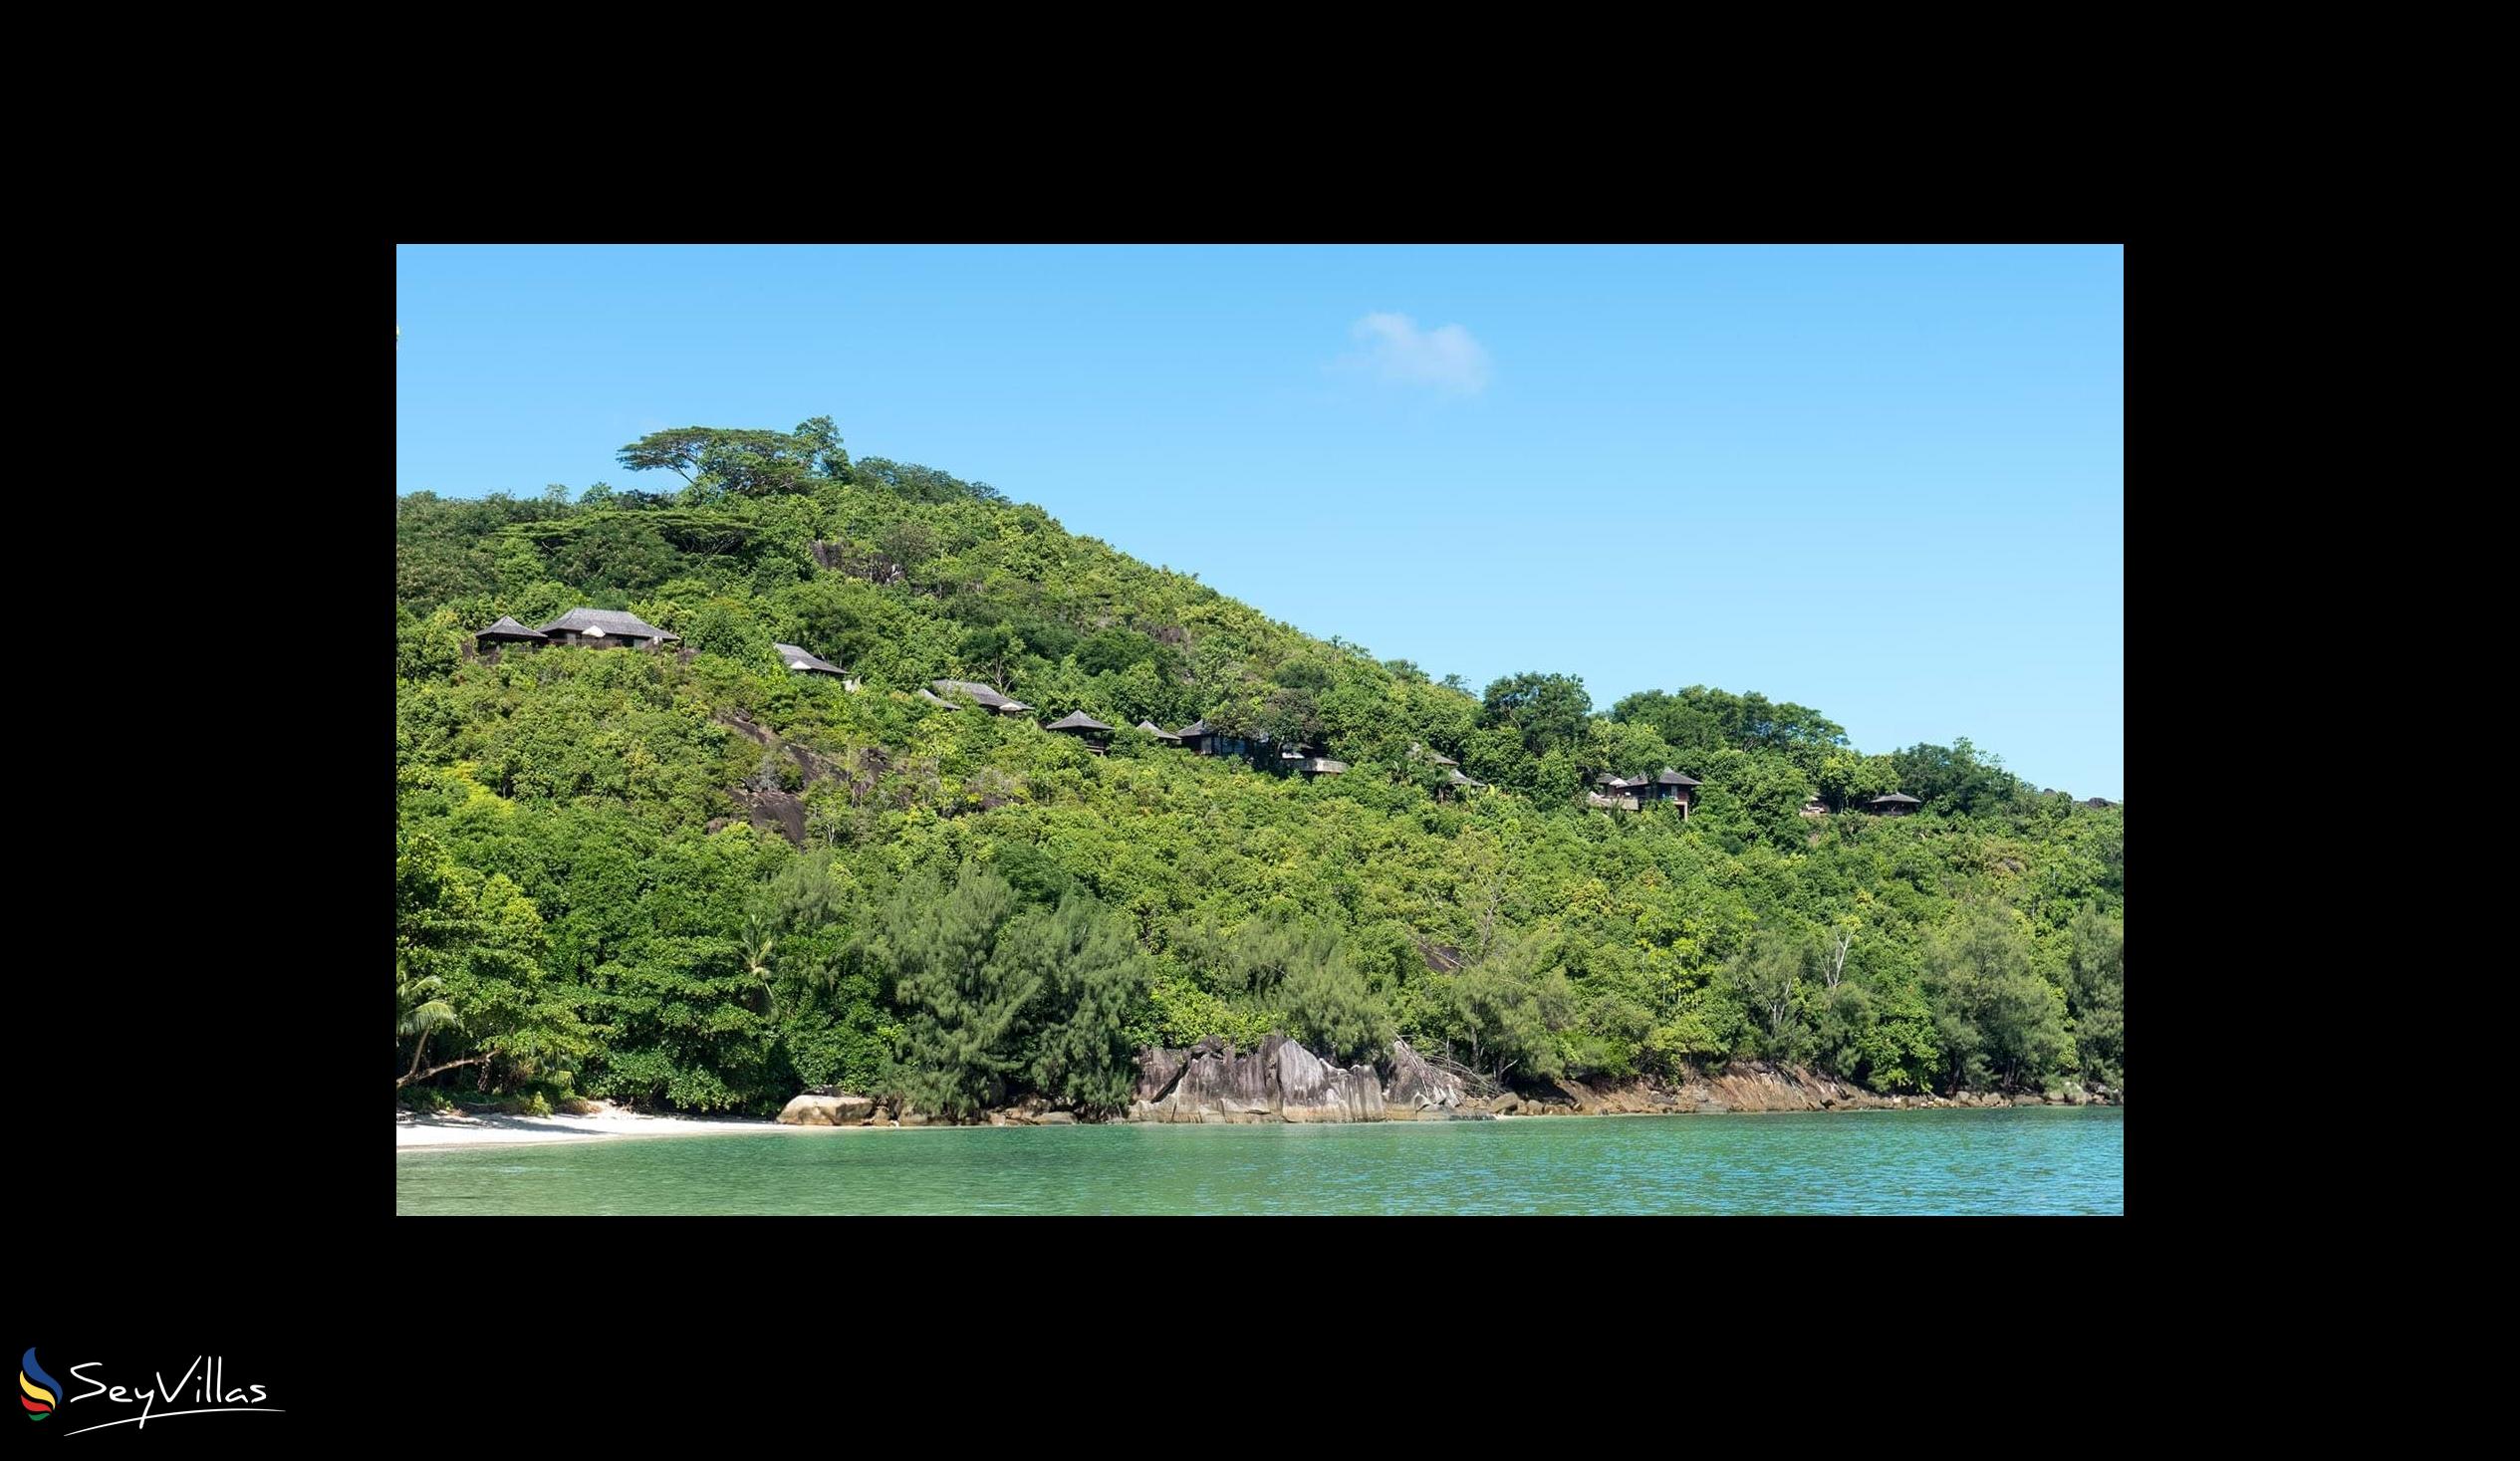 Photo 137: Constance Ephelia Seychelles - Location - Mahé (Seychelles)